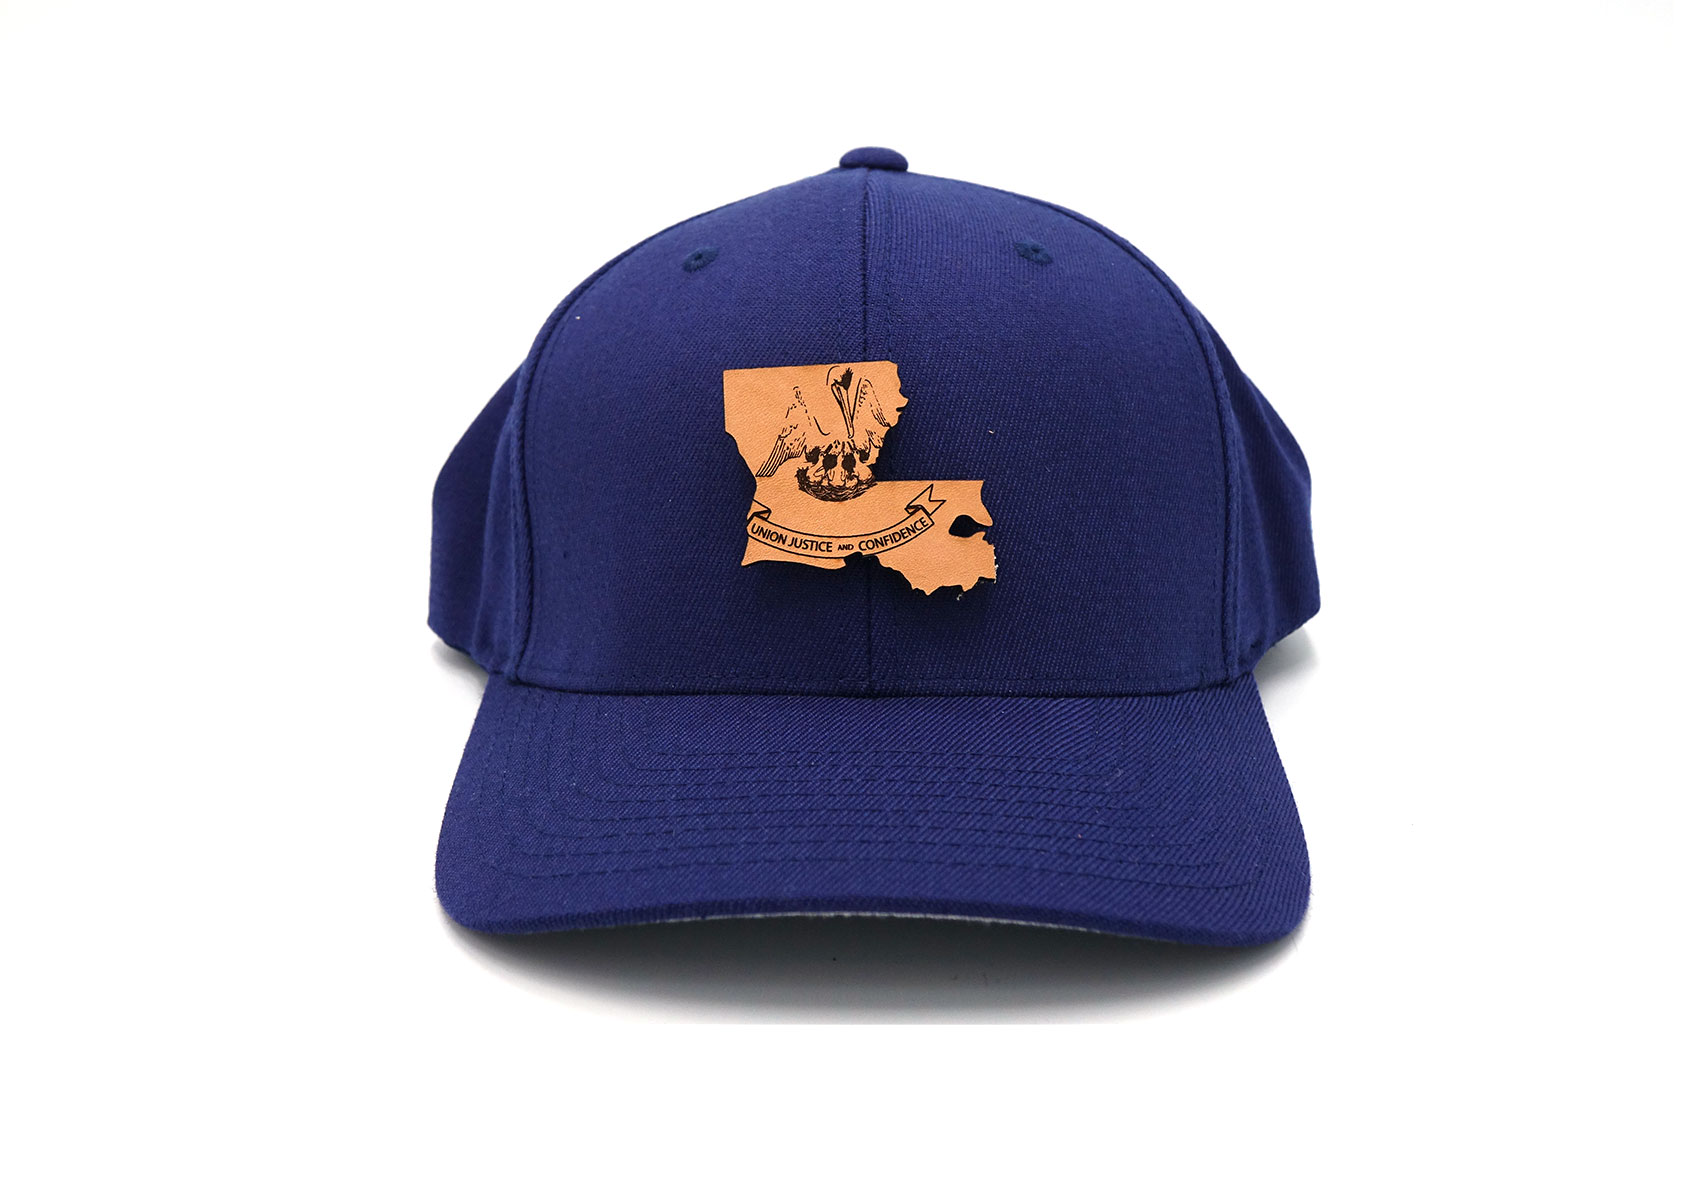 Louisiana  Flatbill Snapback State Flag Hat